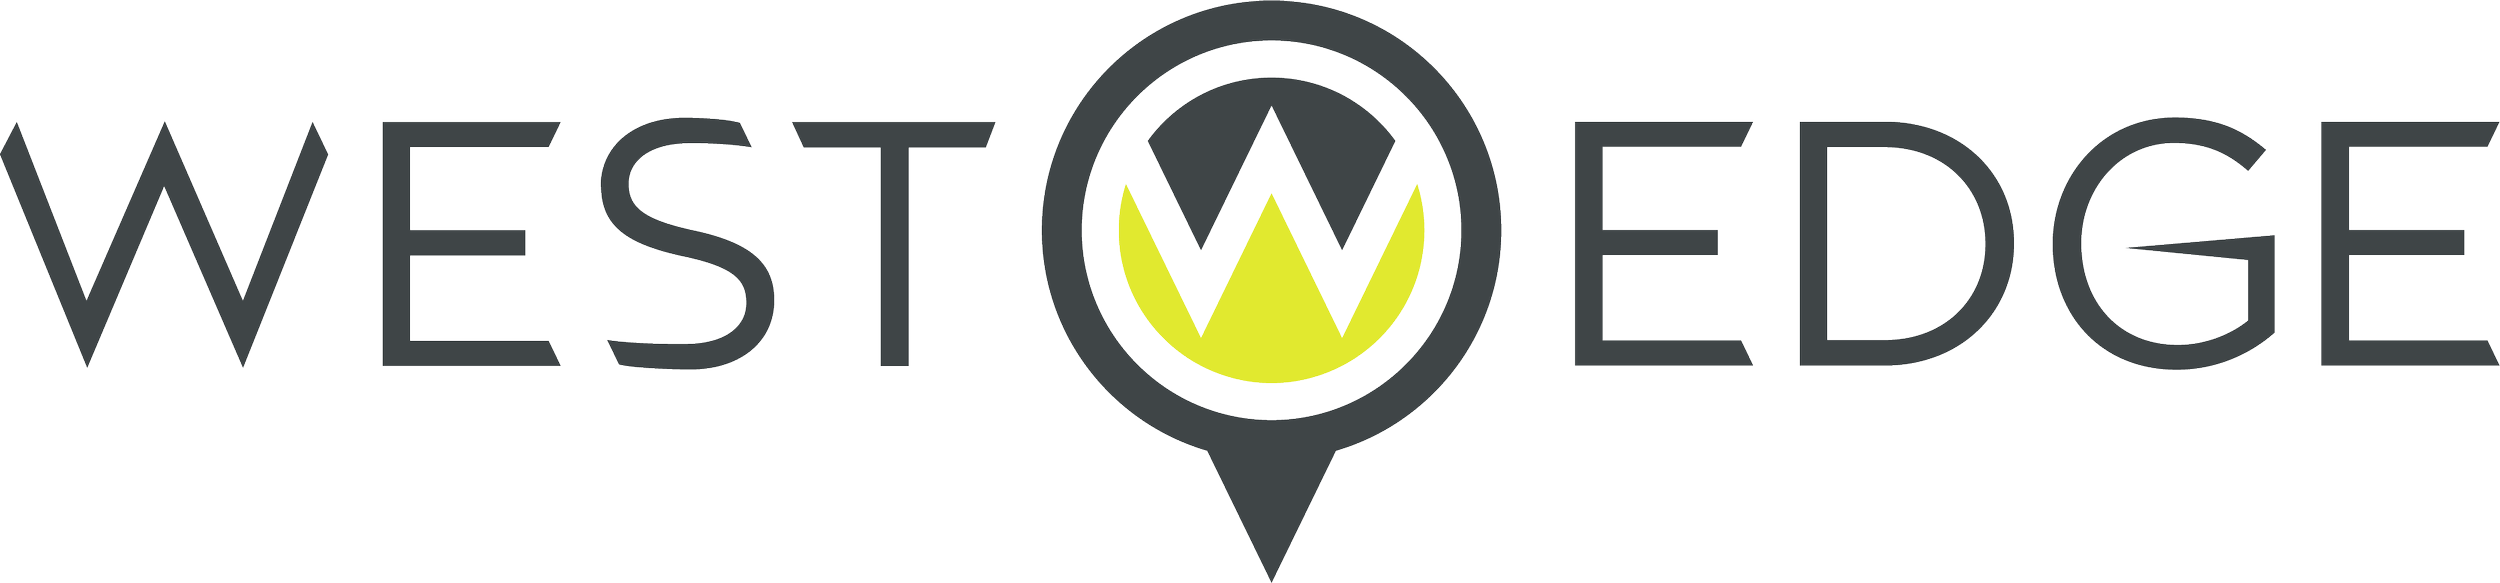 WestEdge_Logo_DarkColor_RGB (1).png